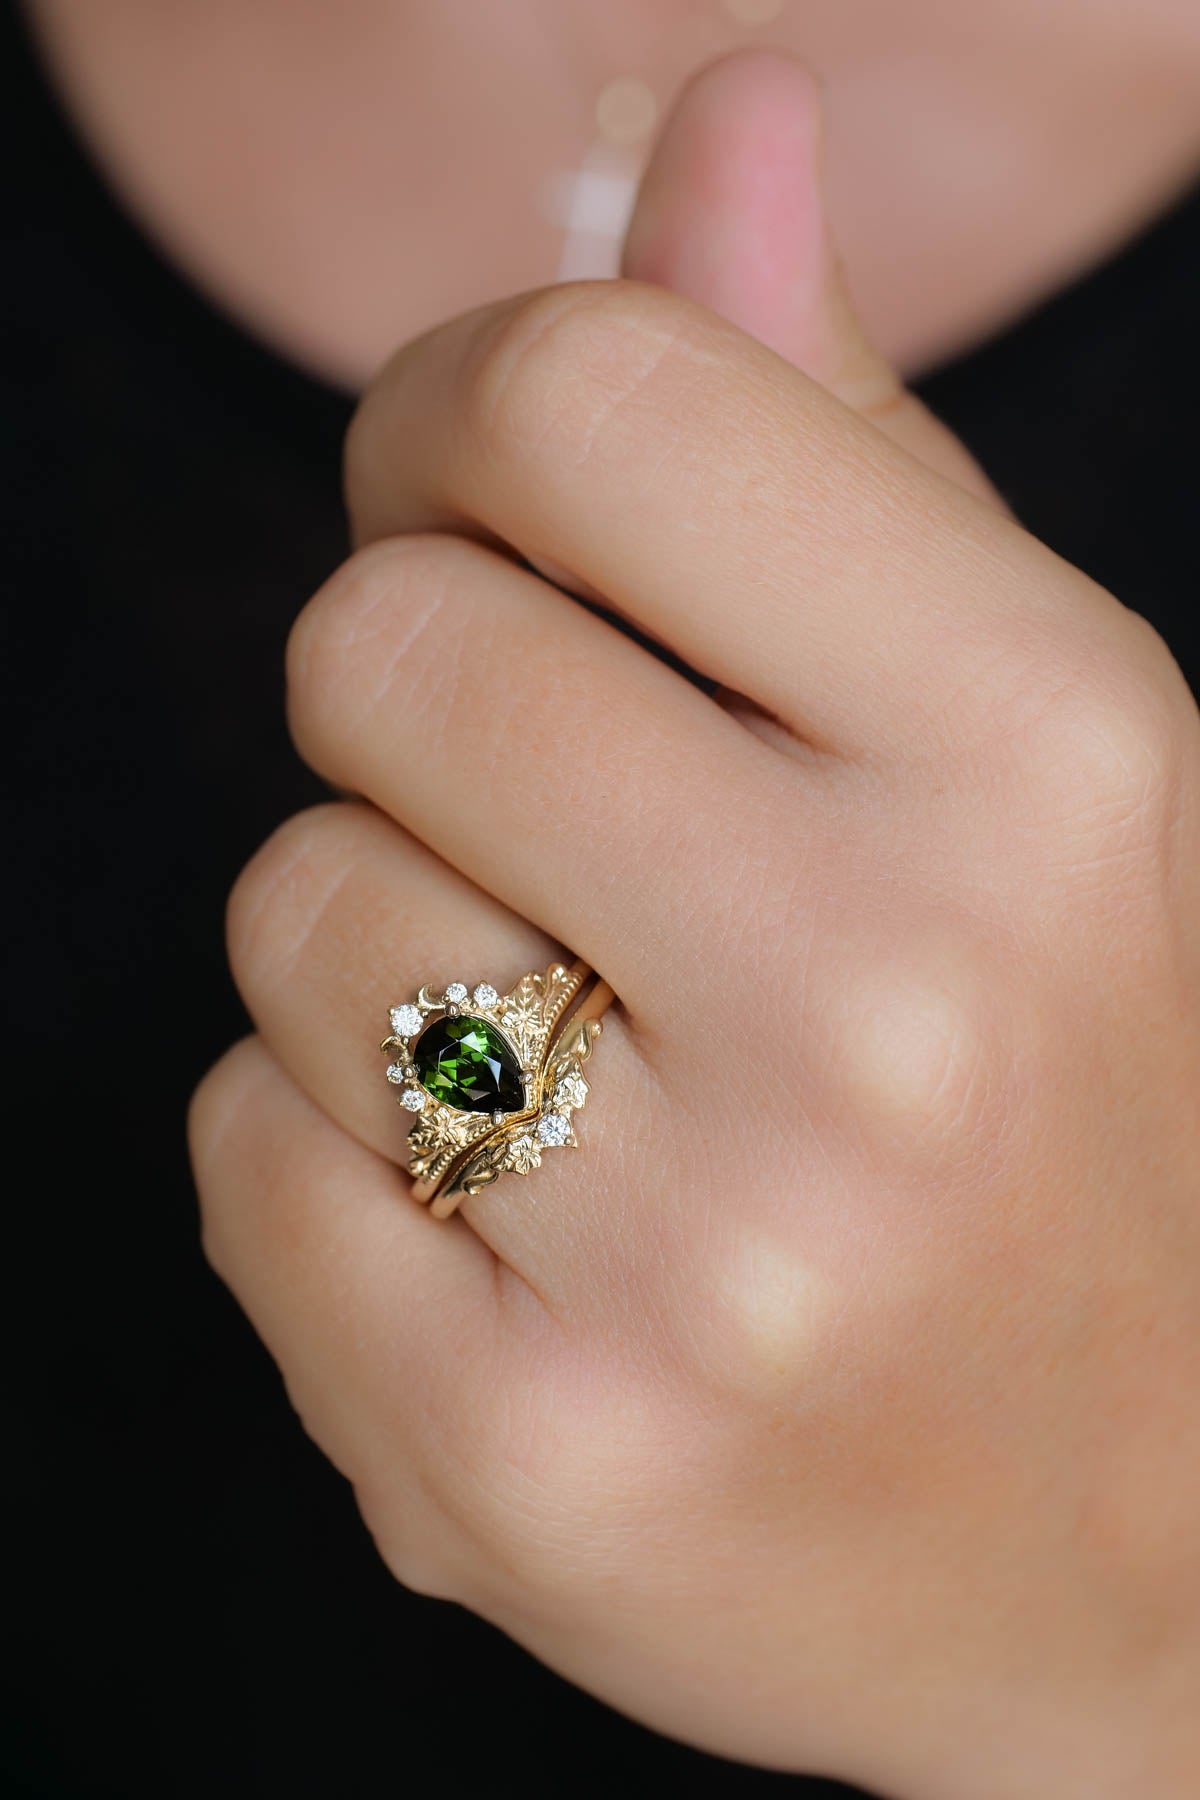 Emerald Bridal Ring Set with Diamonds, Alternative Engagement Ring Set / Ariadne